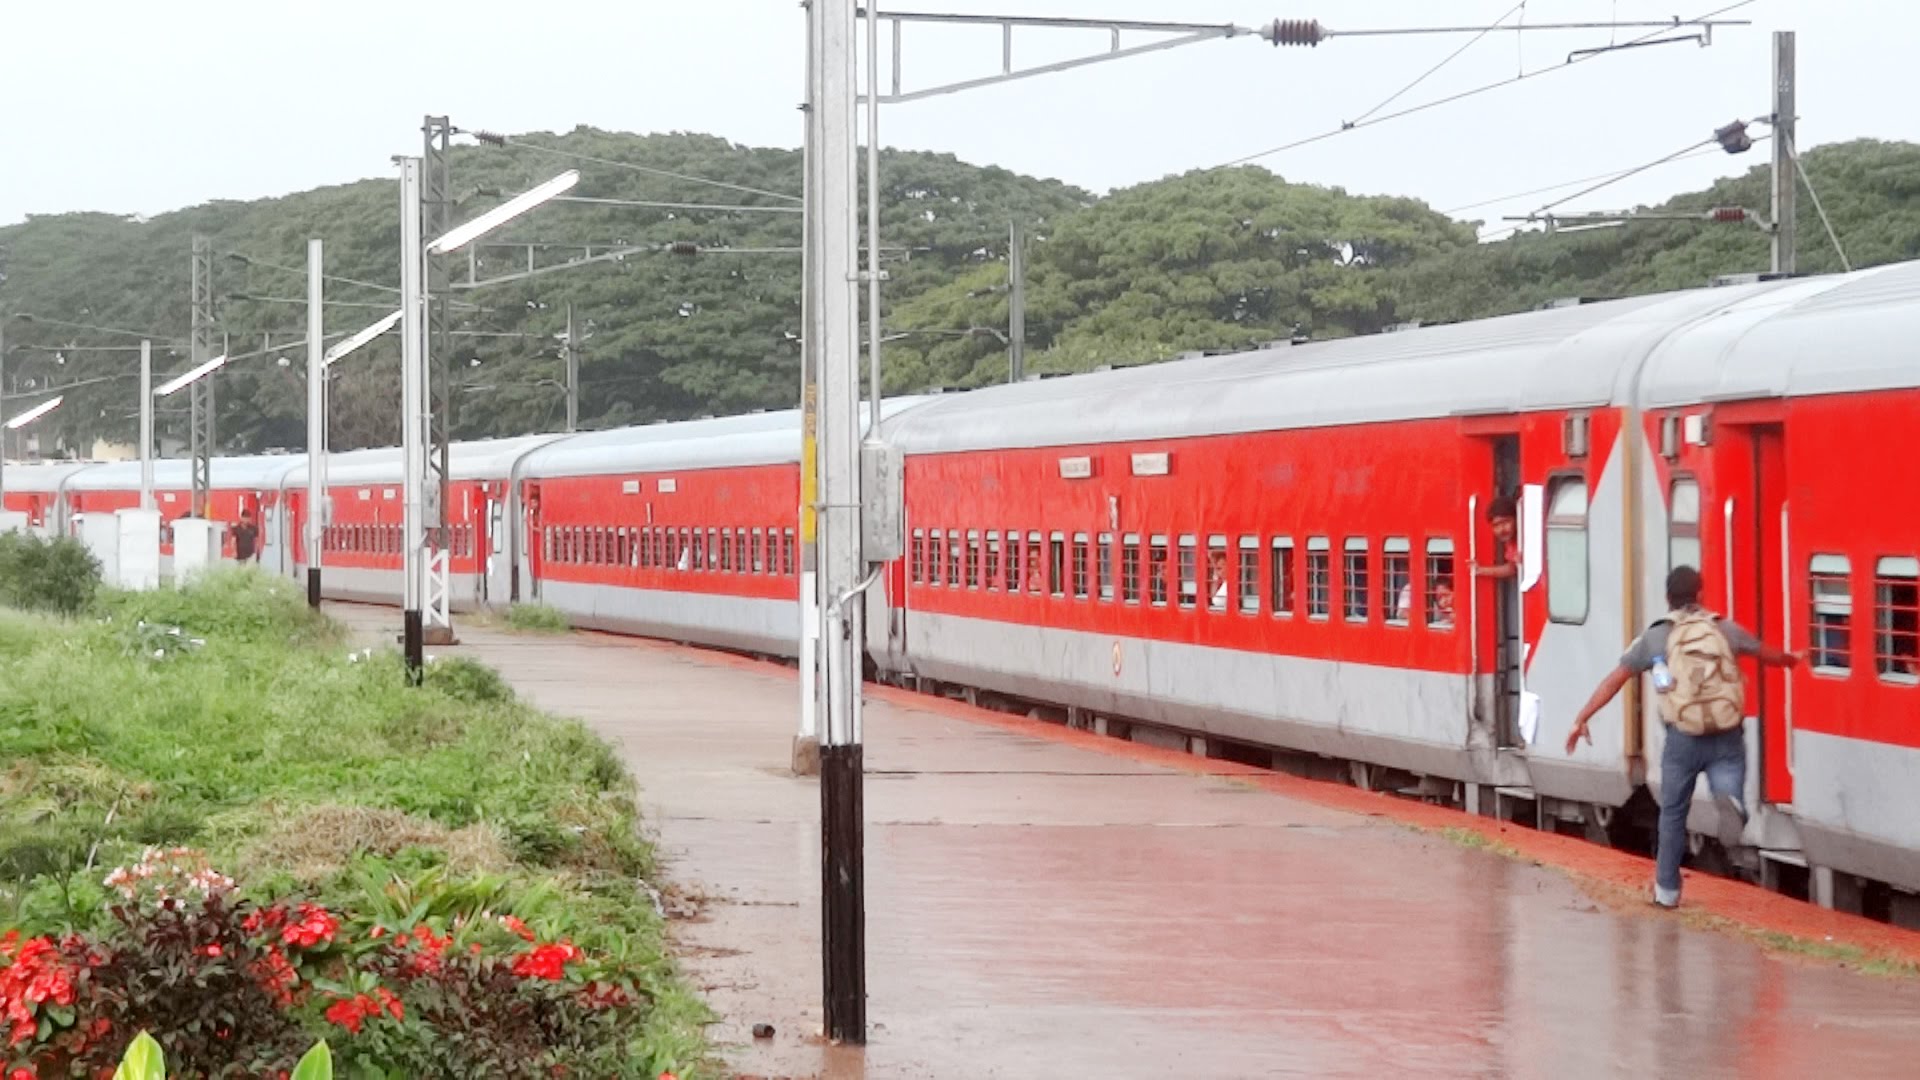 LIFE RISKING ! boarding a RUNNING Train : Indian Railways - YouTube